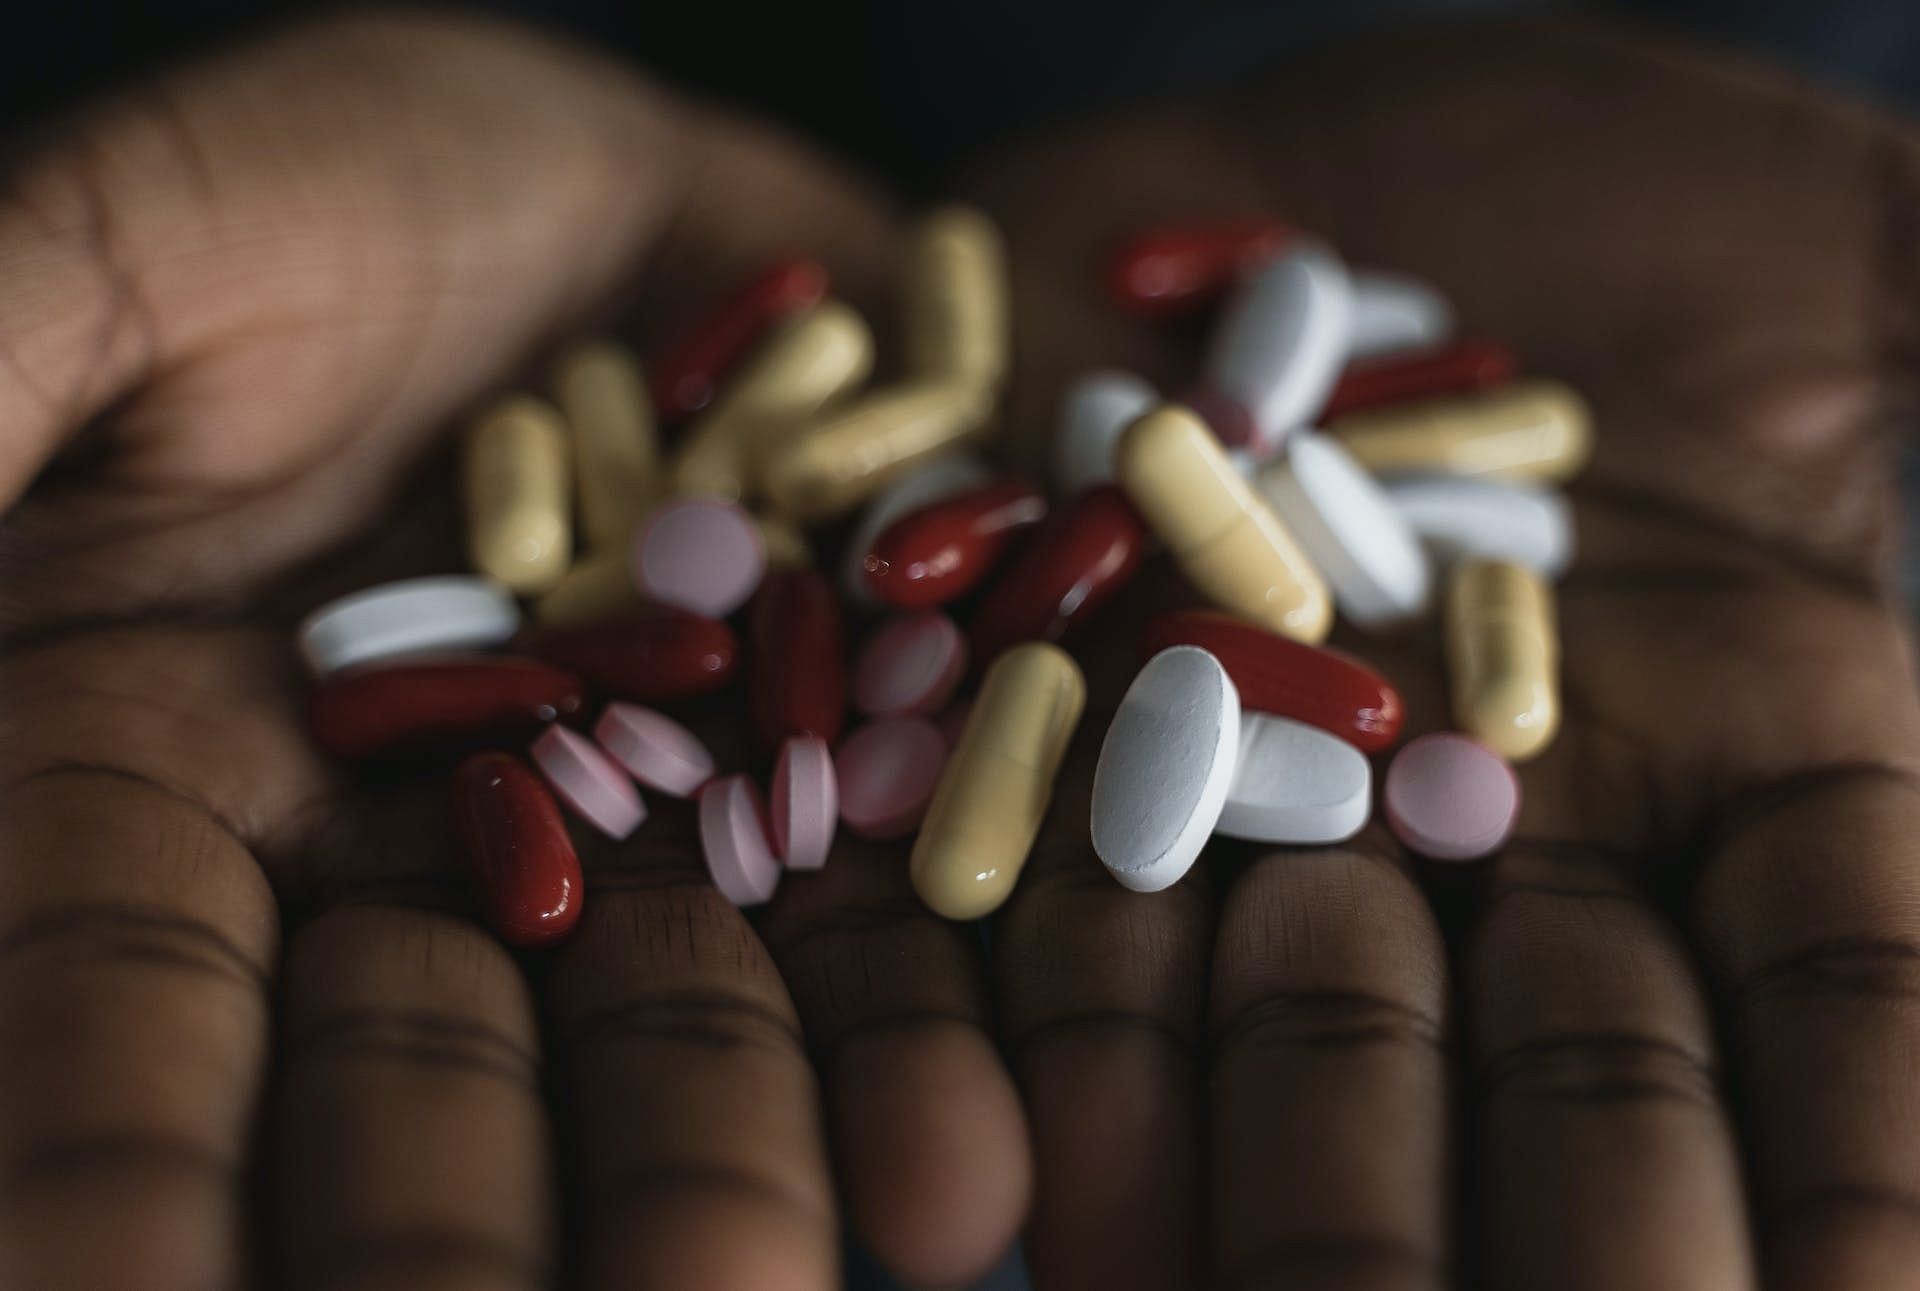 Treatments can include antibiotics. (Image via Pexels/Tima Miroshnichenko)